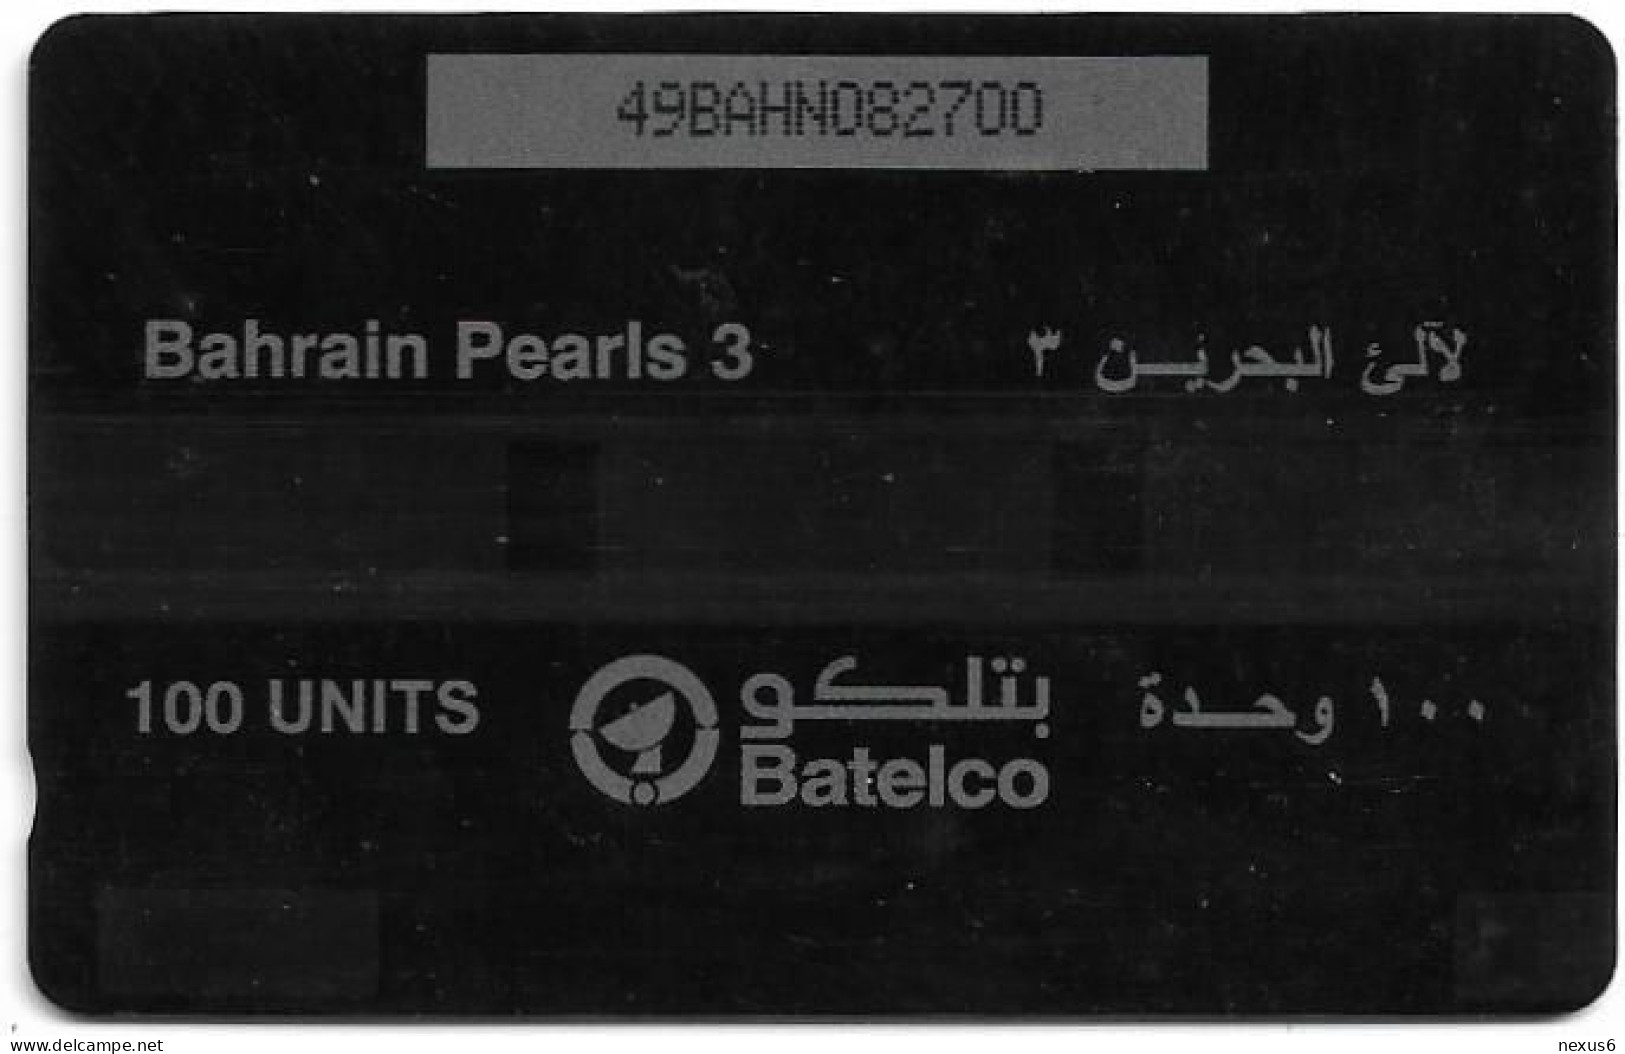 Bahrain - Batelco (GPT) - Pearls 3 - 49BAHN - 2001, Used - Baharain